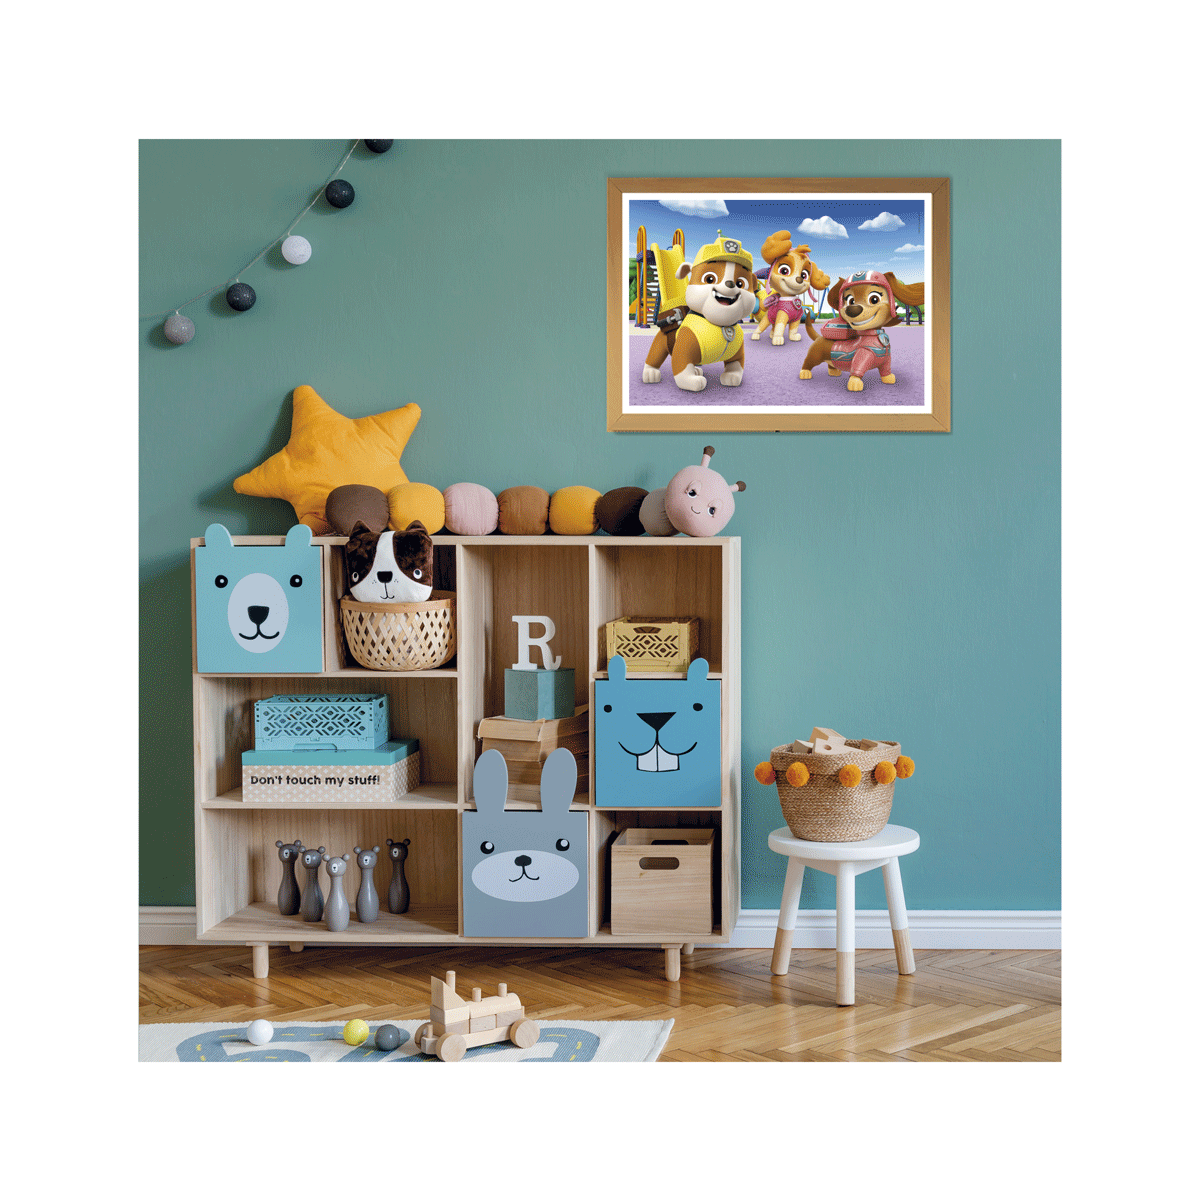 Clementoni supercolor puzzle paw patrol - 2x20 pezzi, puzzle bambini 3 anni - CLEMENTONI